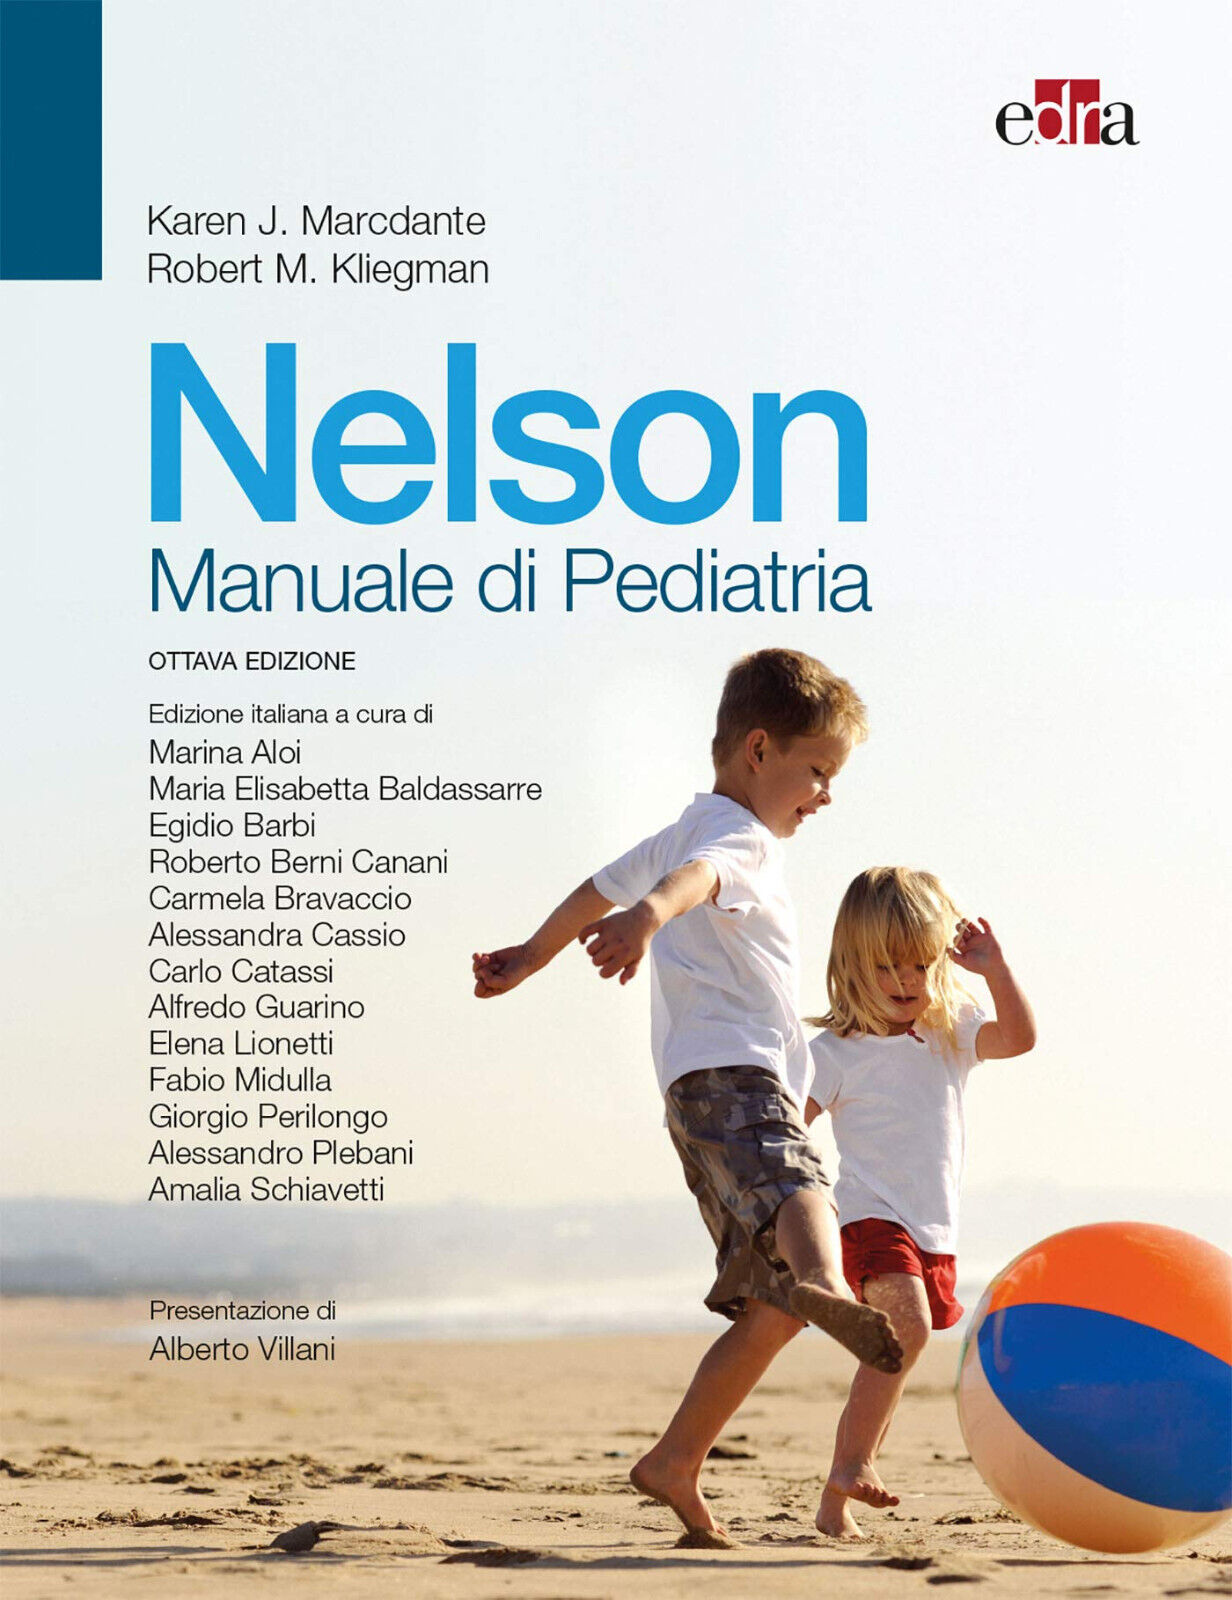 Nelson. Manuale di pediatria - Karen J. Marcdante, Robert M. Kliegman - 2019